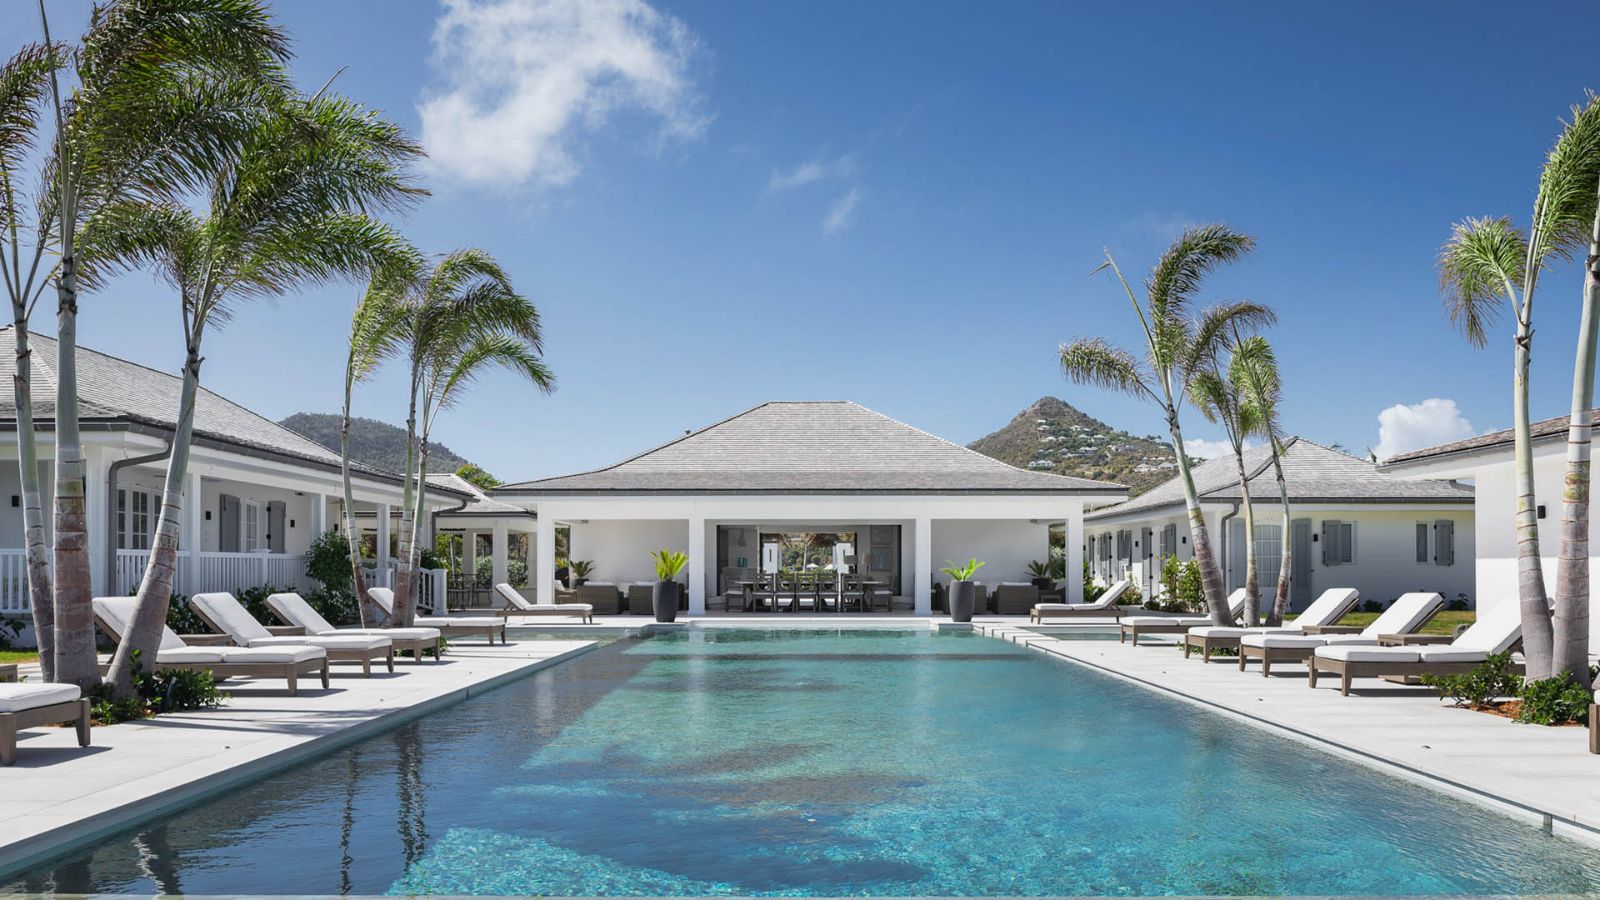 Villa Blanc, St Barths - pool terrace and sun loungers beneath palm trees